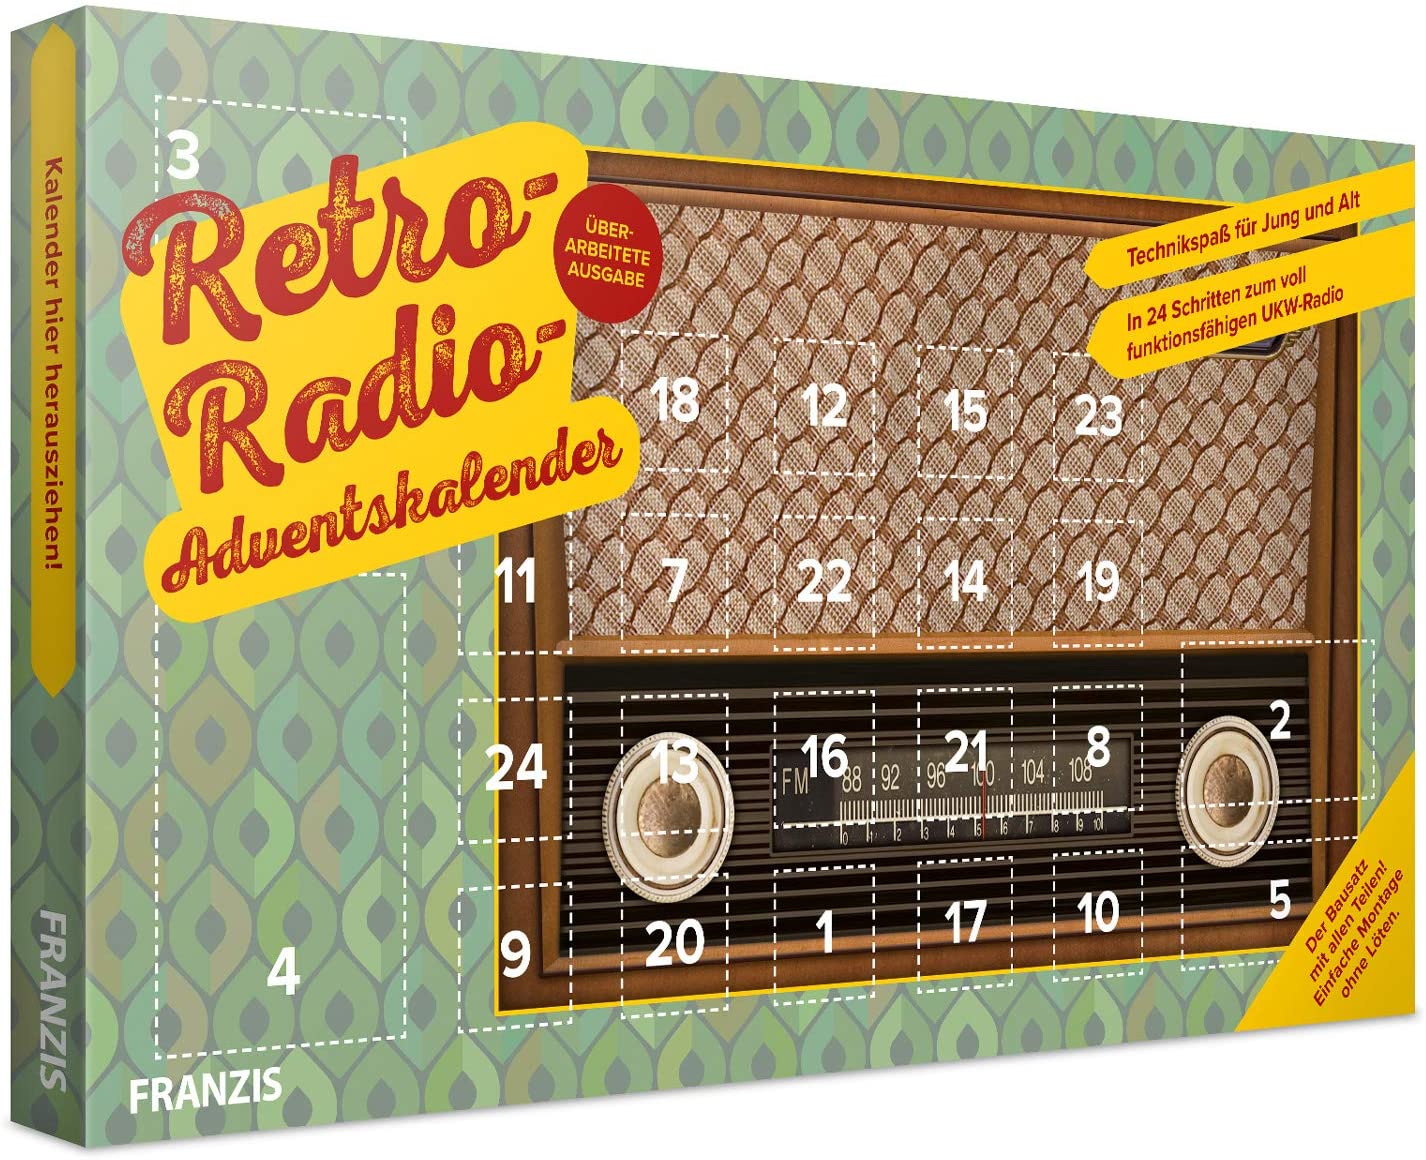 Franzis Retro Radio Advent Calendar 2019 | In 24 Steps To Your Own Fm Radio